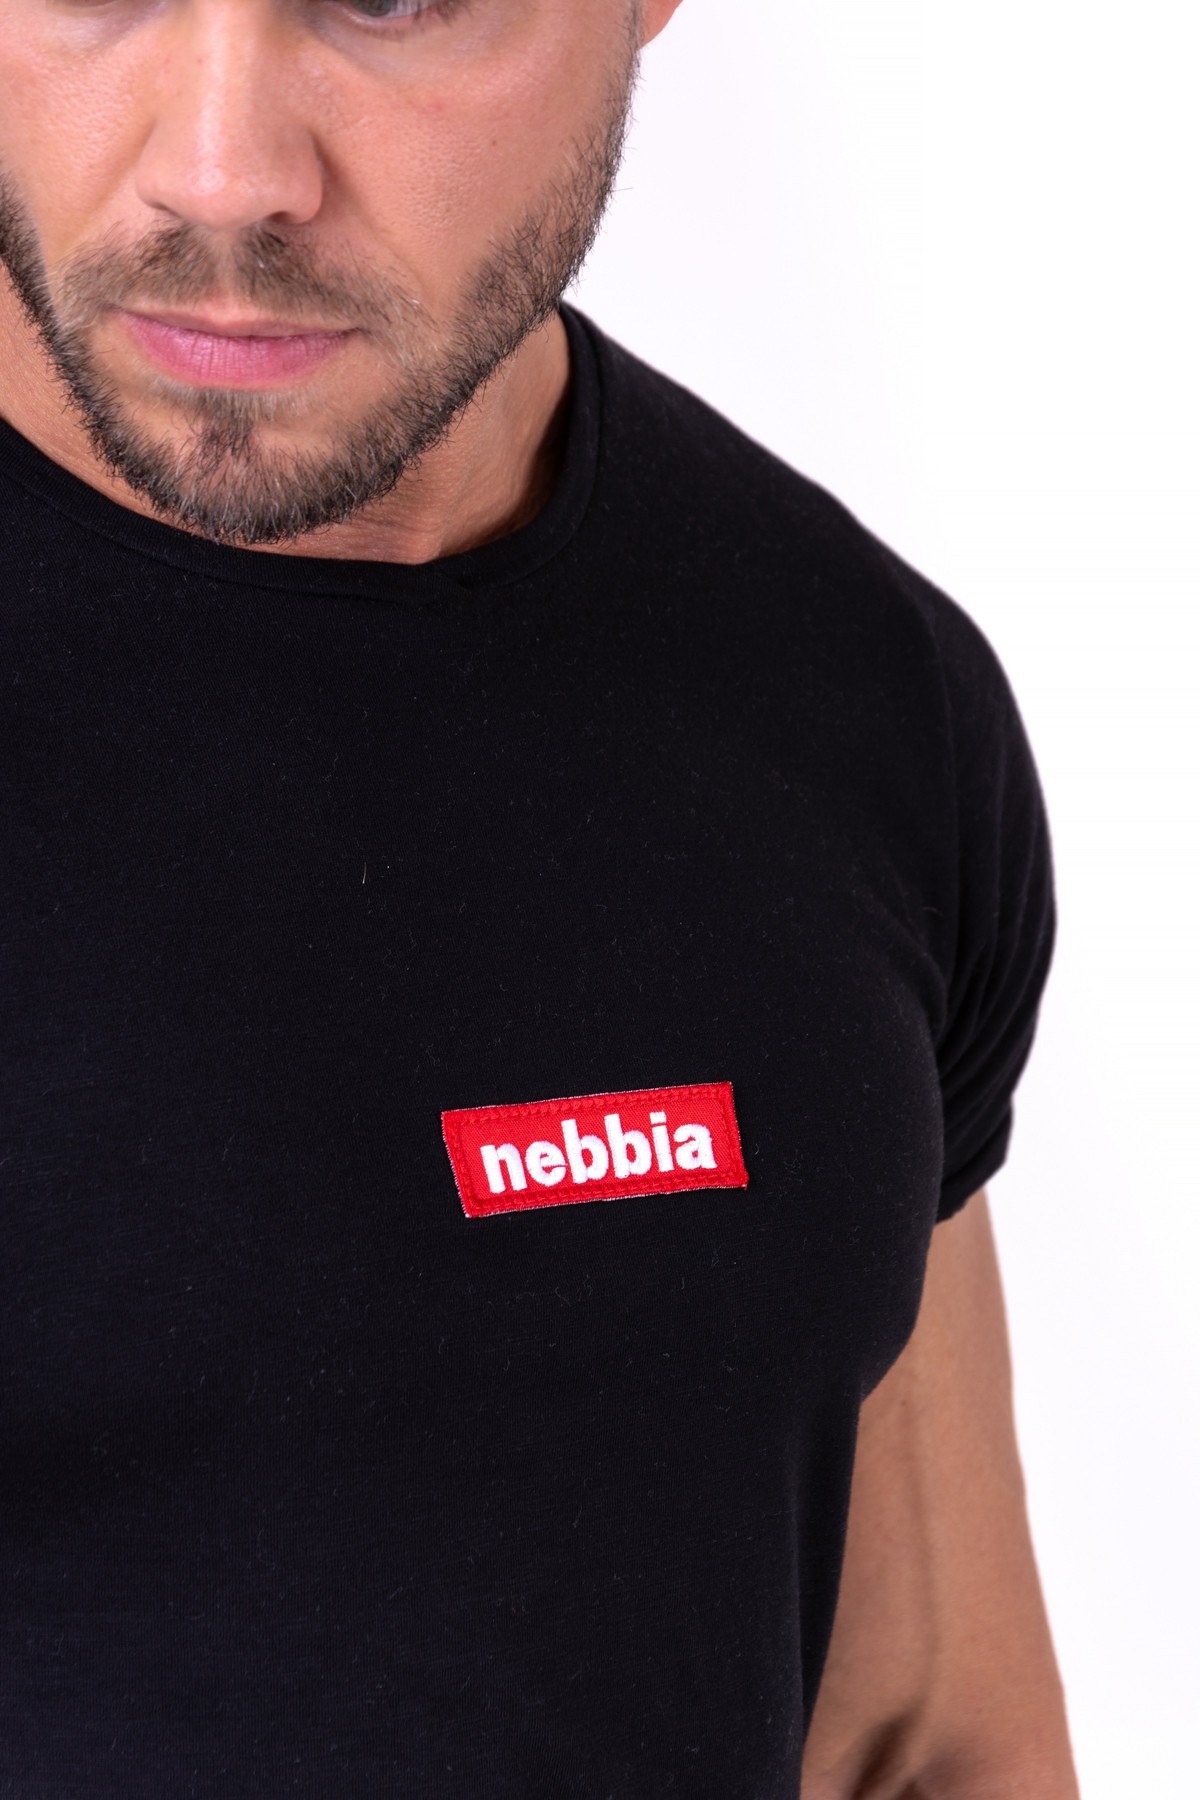 NEBBIA Red Label V-typical T-shirt Black 142